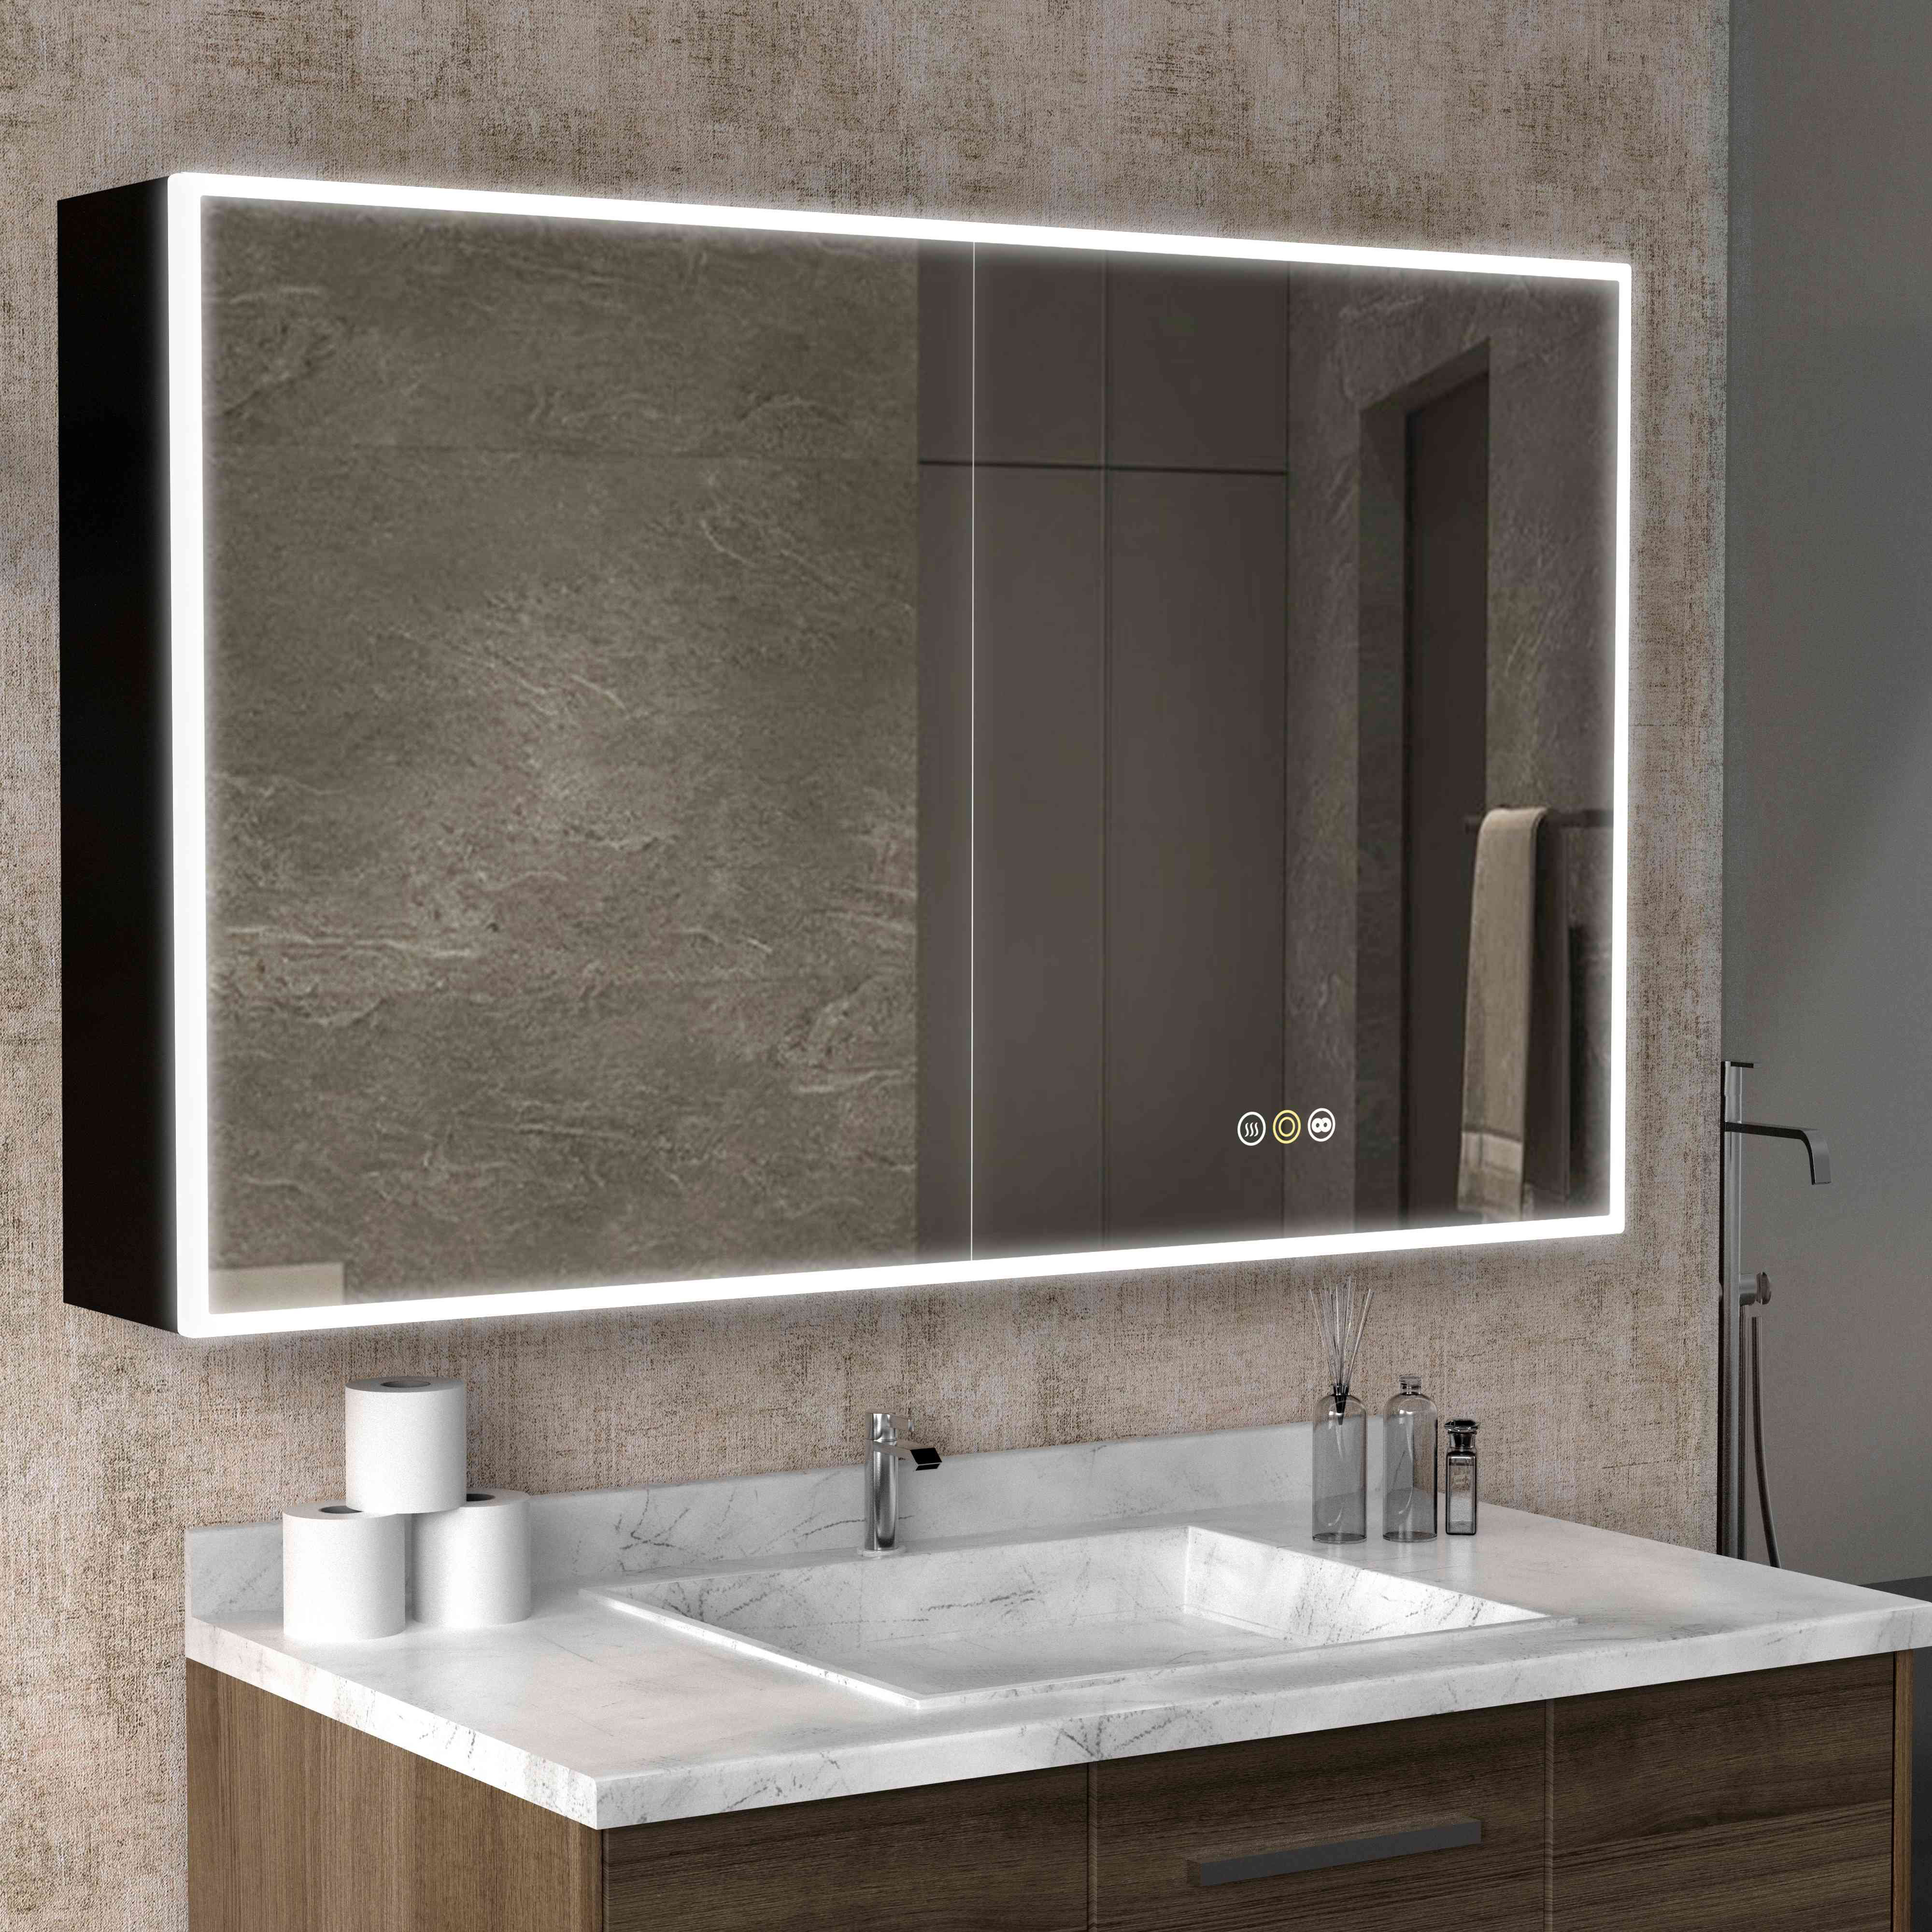 40 Black LED Lighted Bathroom Medicine Cabinet Vanity Mirror with Storage & Glass Door